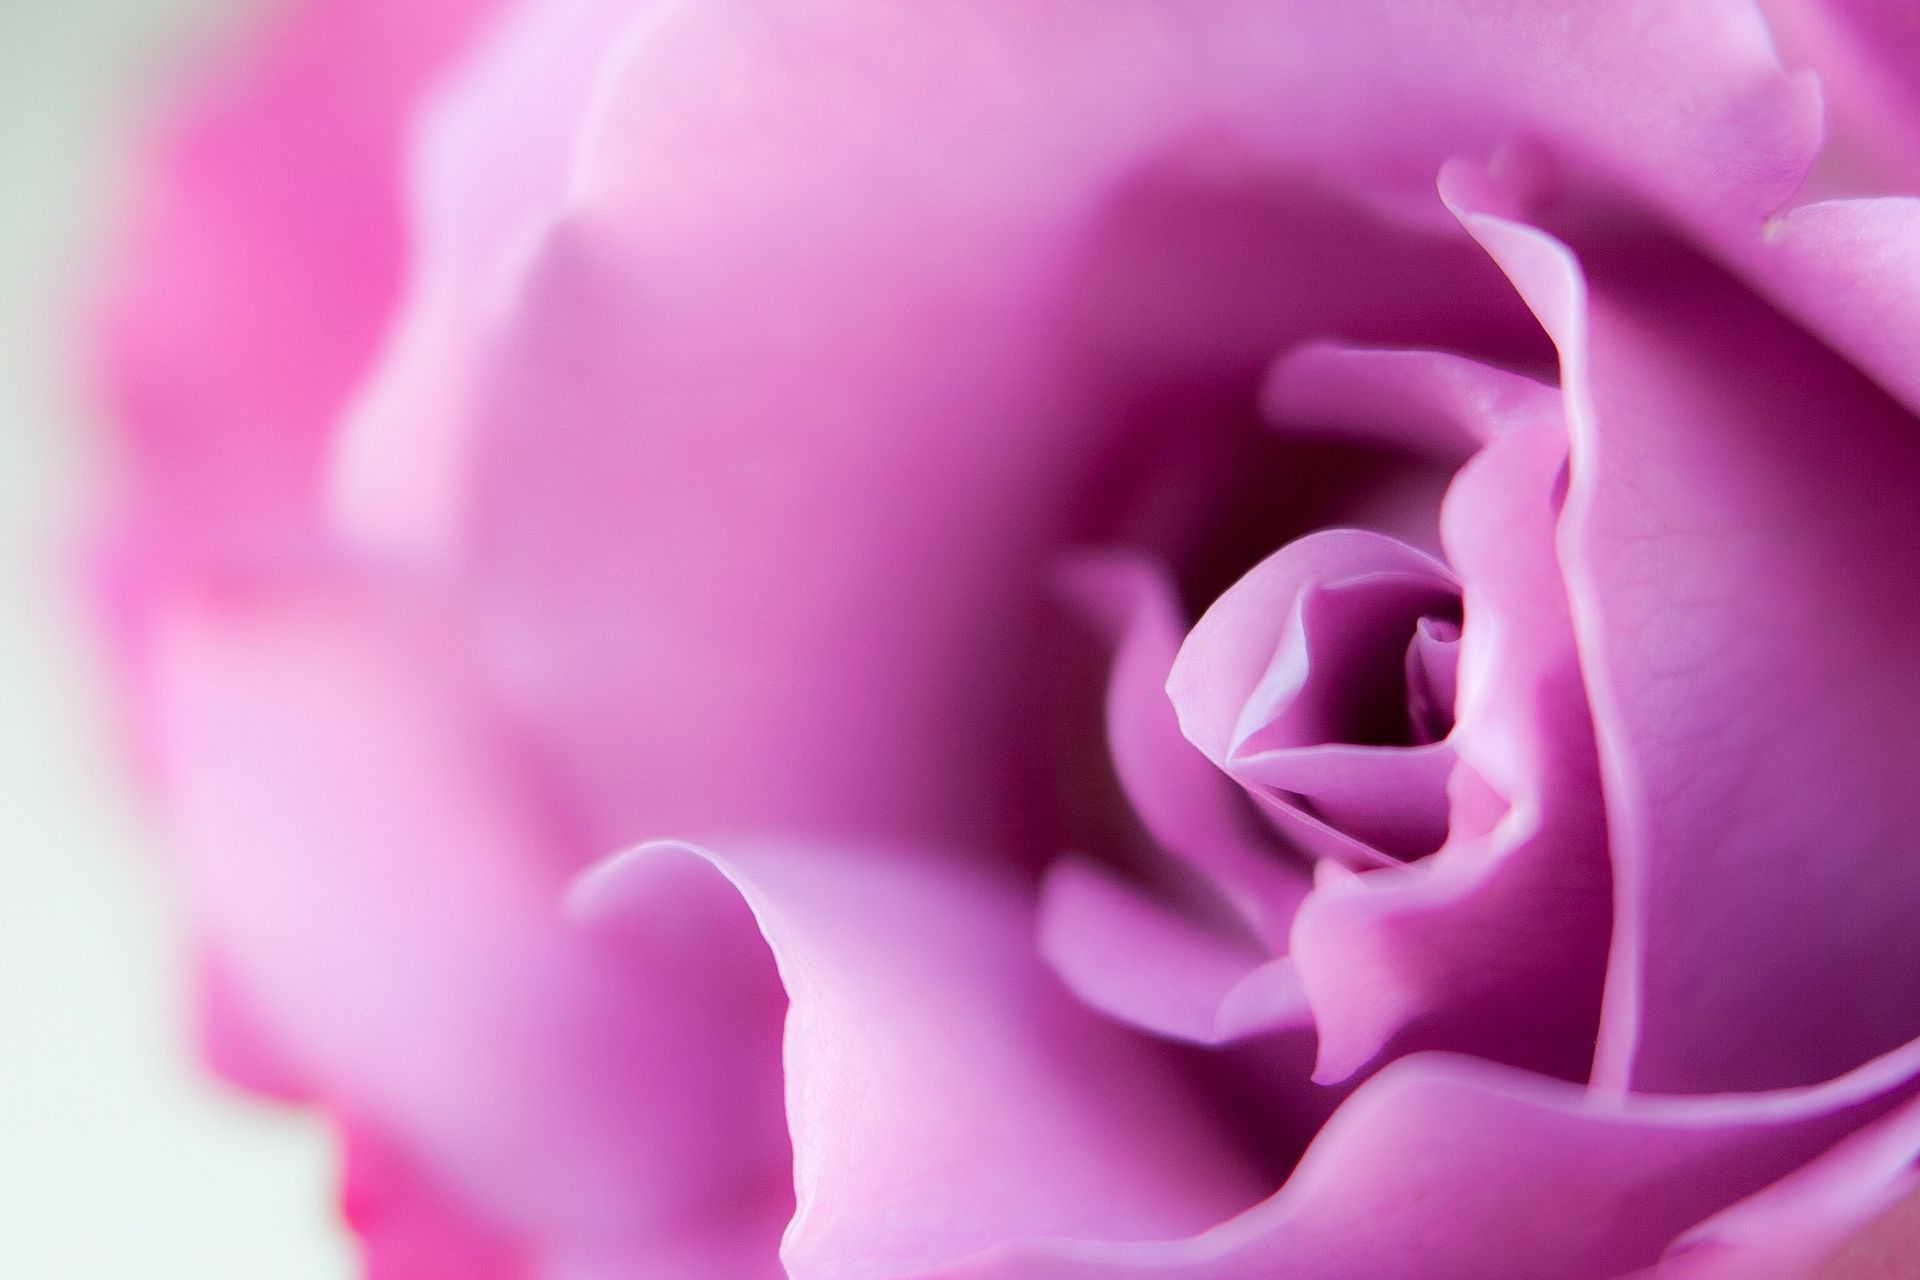 A close-up image of a pink rose.